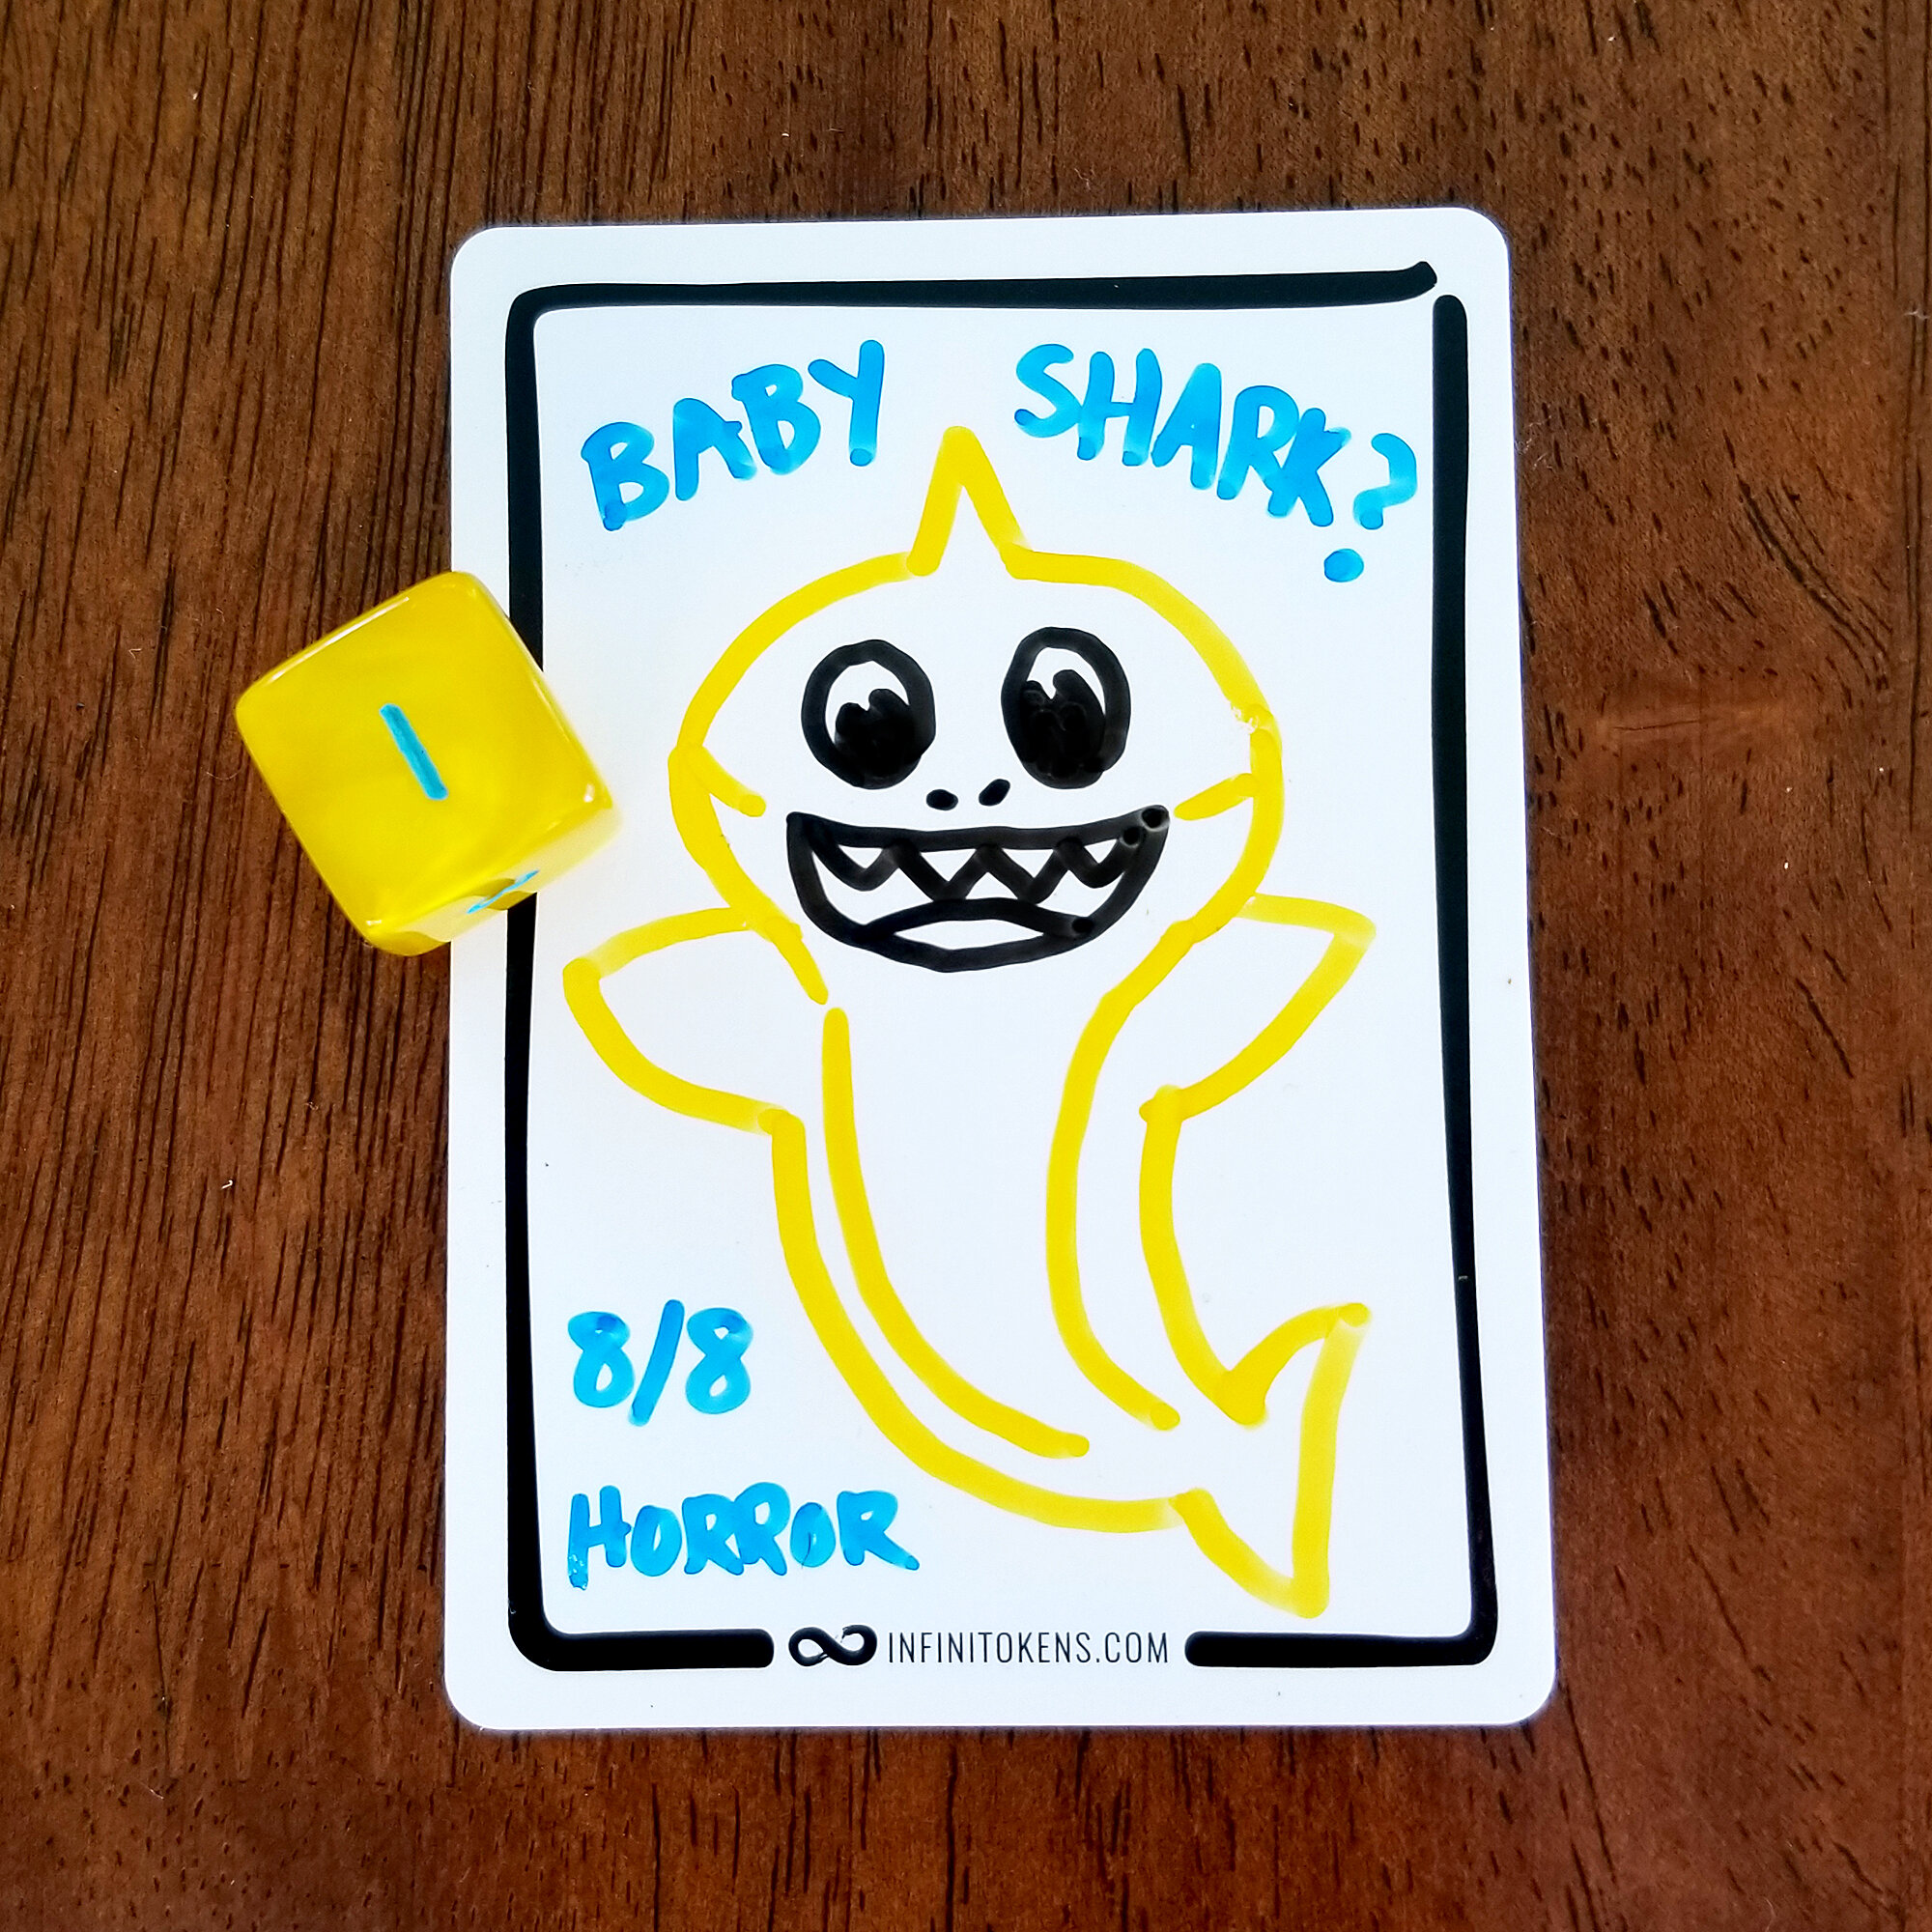 BabyShark_Sharkweek2019_infinitokens.jpg